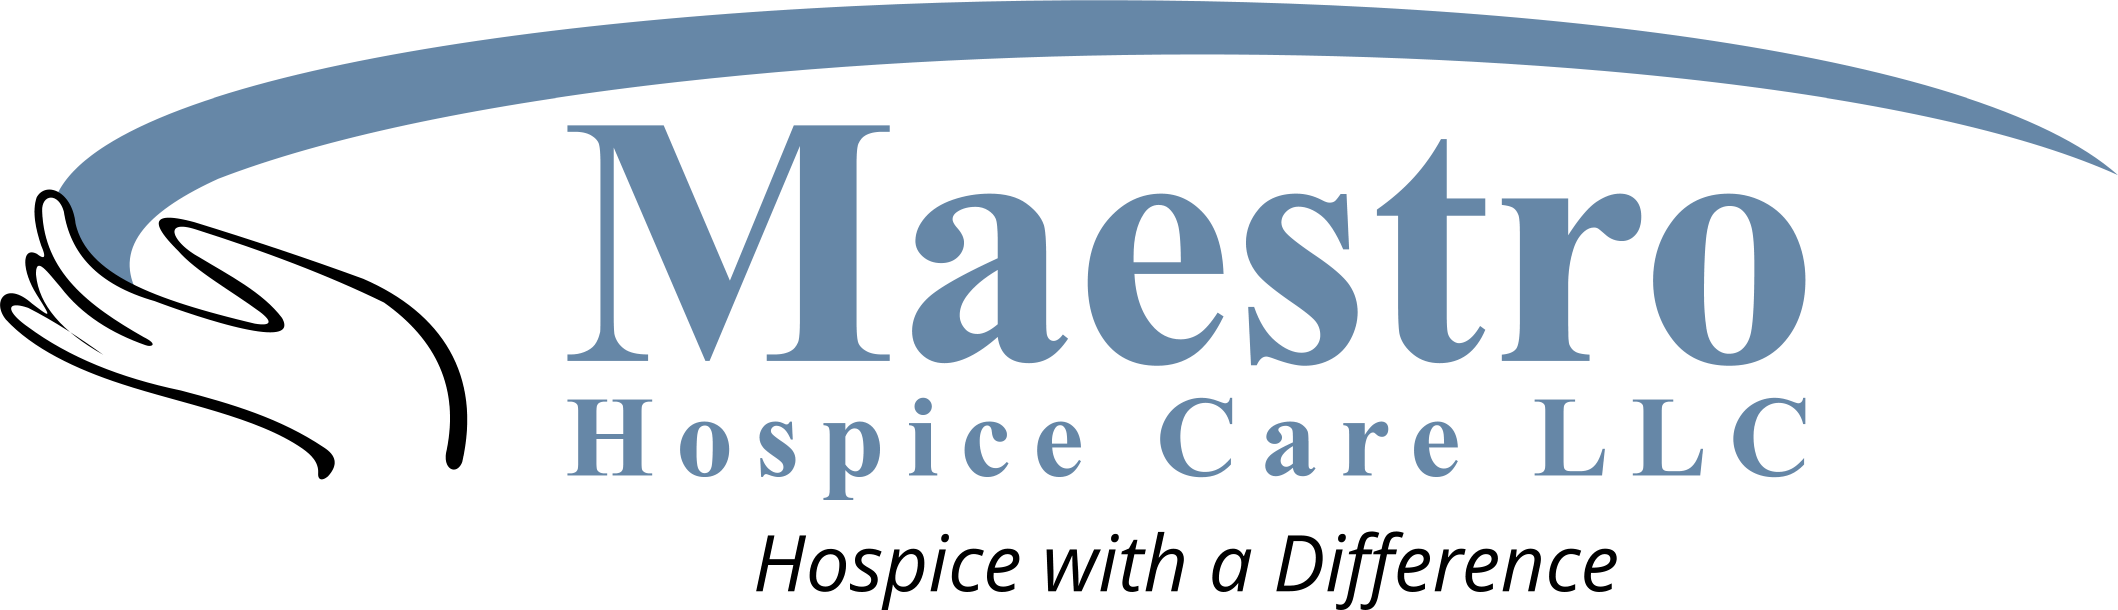 Maestro Hospice Care LLC